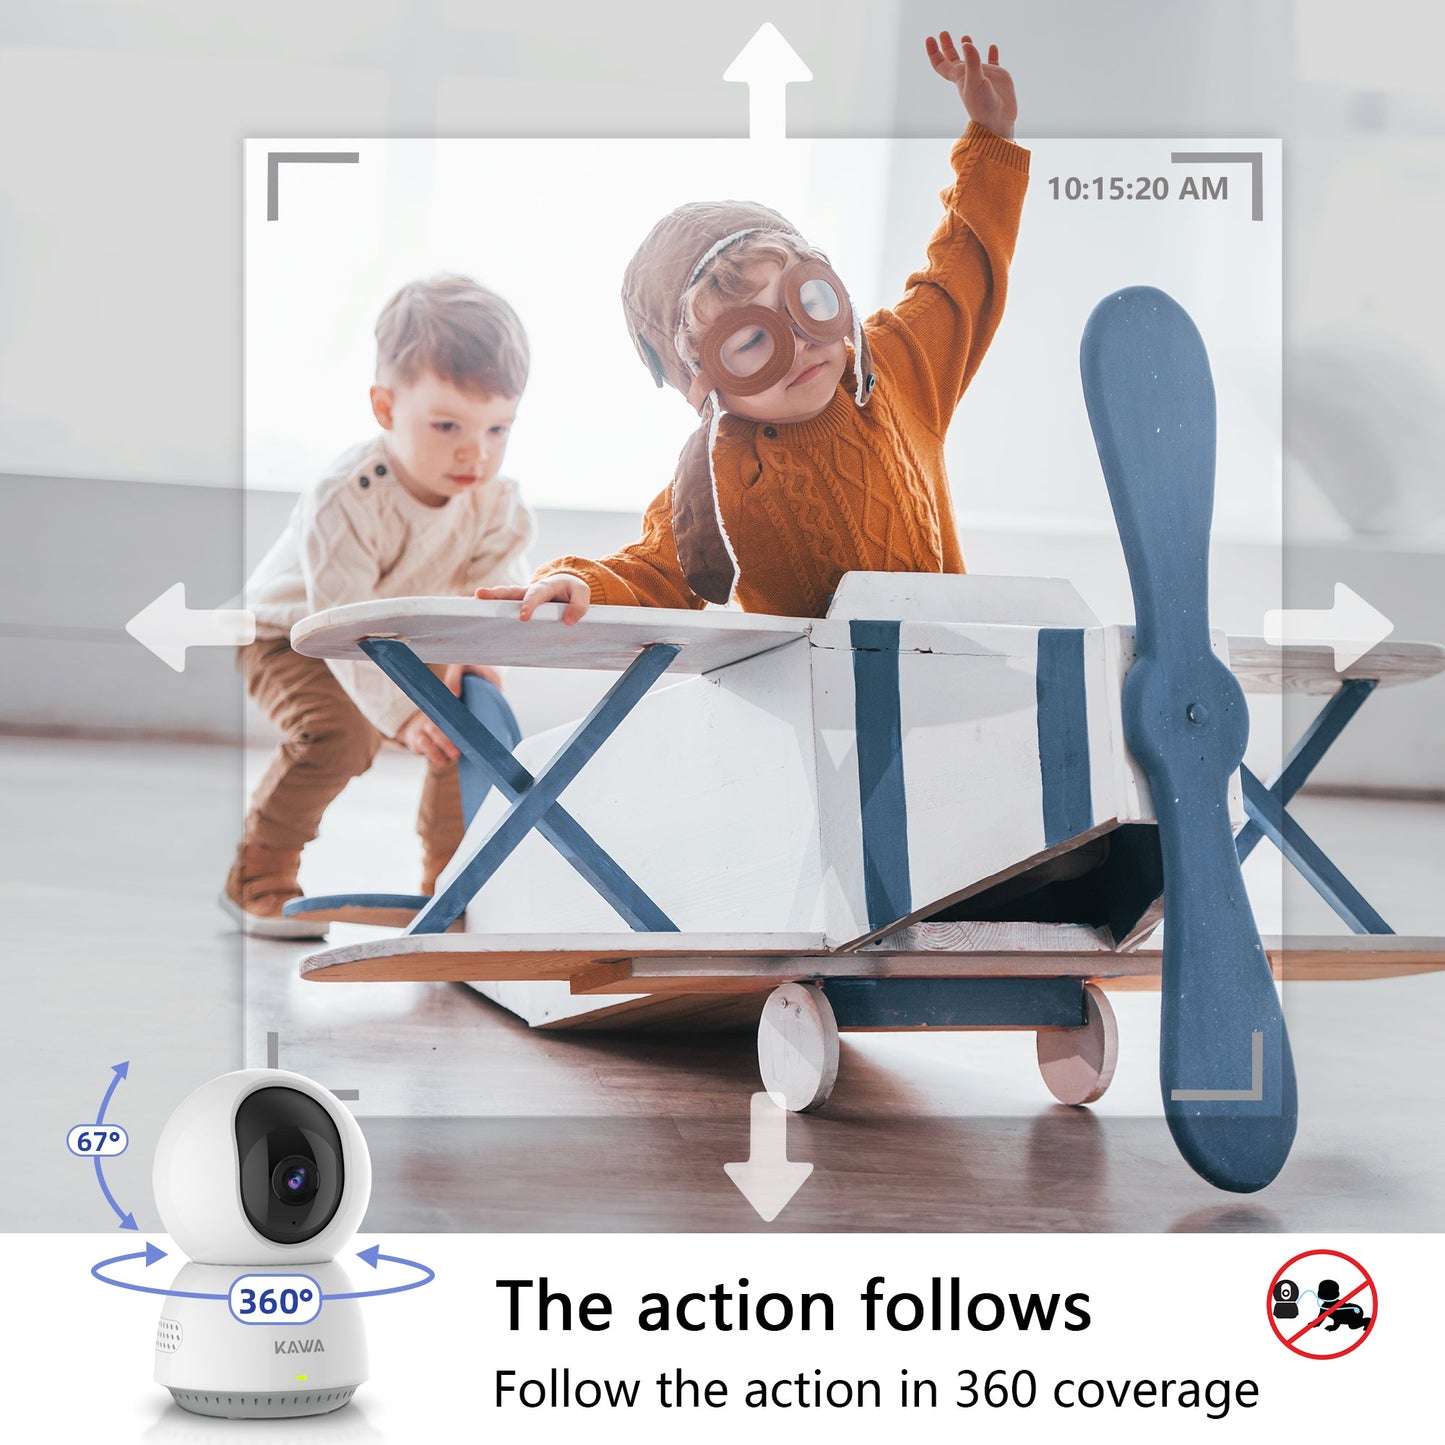 KAWA A7 | 2K QHD Security Camera | Night Vision | Motion Tracking | 360° View | AI Detection | 2-Way Audio | Built-in Siren | Alexa Compatible